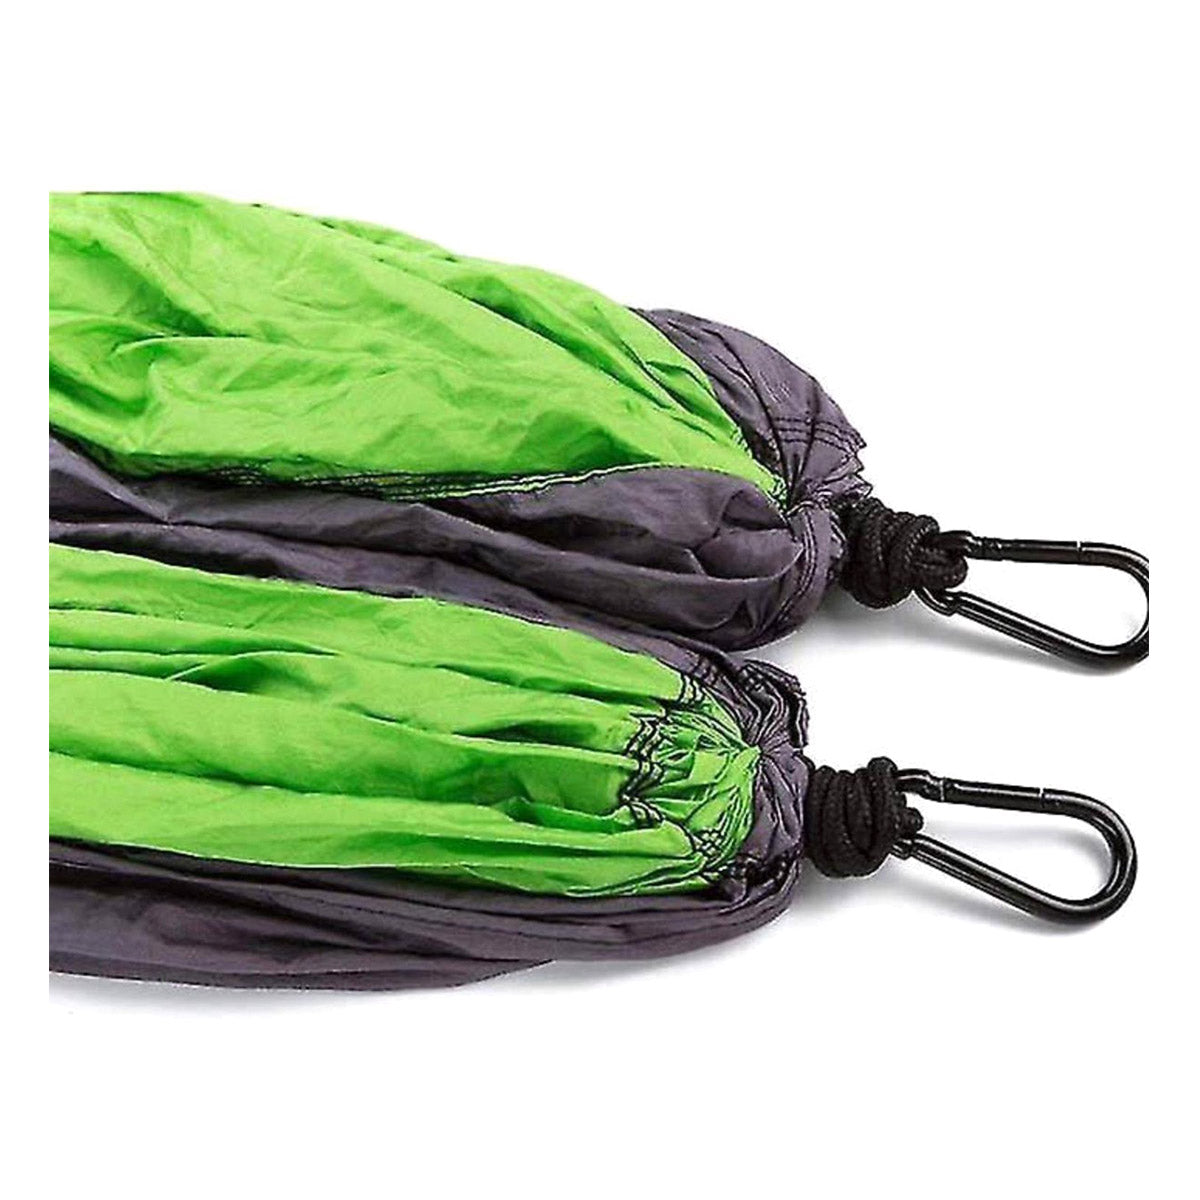 <tc>Ariko</tc> Ultralight Hammock - Lime Green - With Storage Bag - Compact